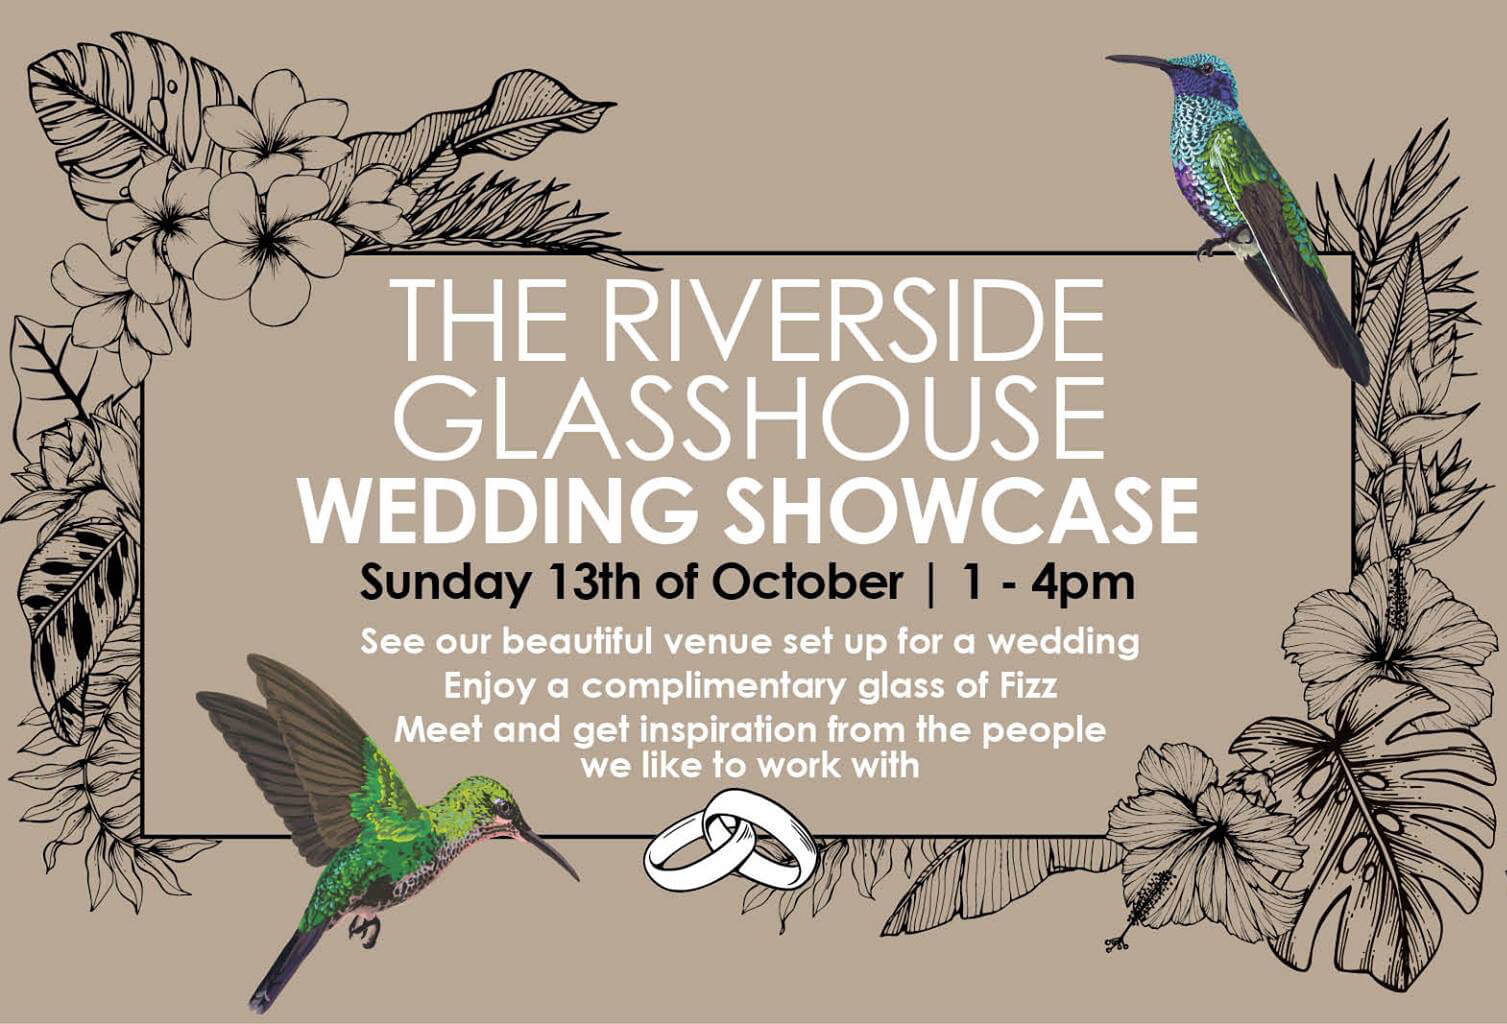 The Riverside Glasshouse Wedding Showcase